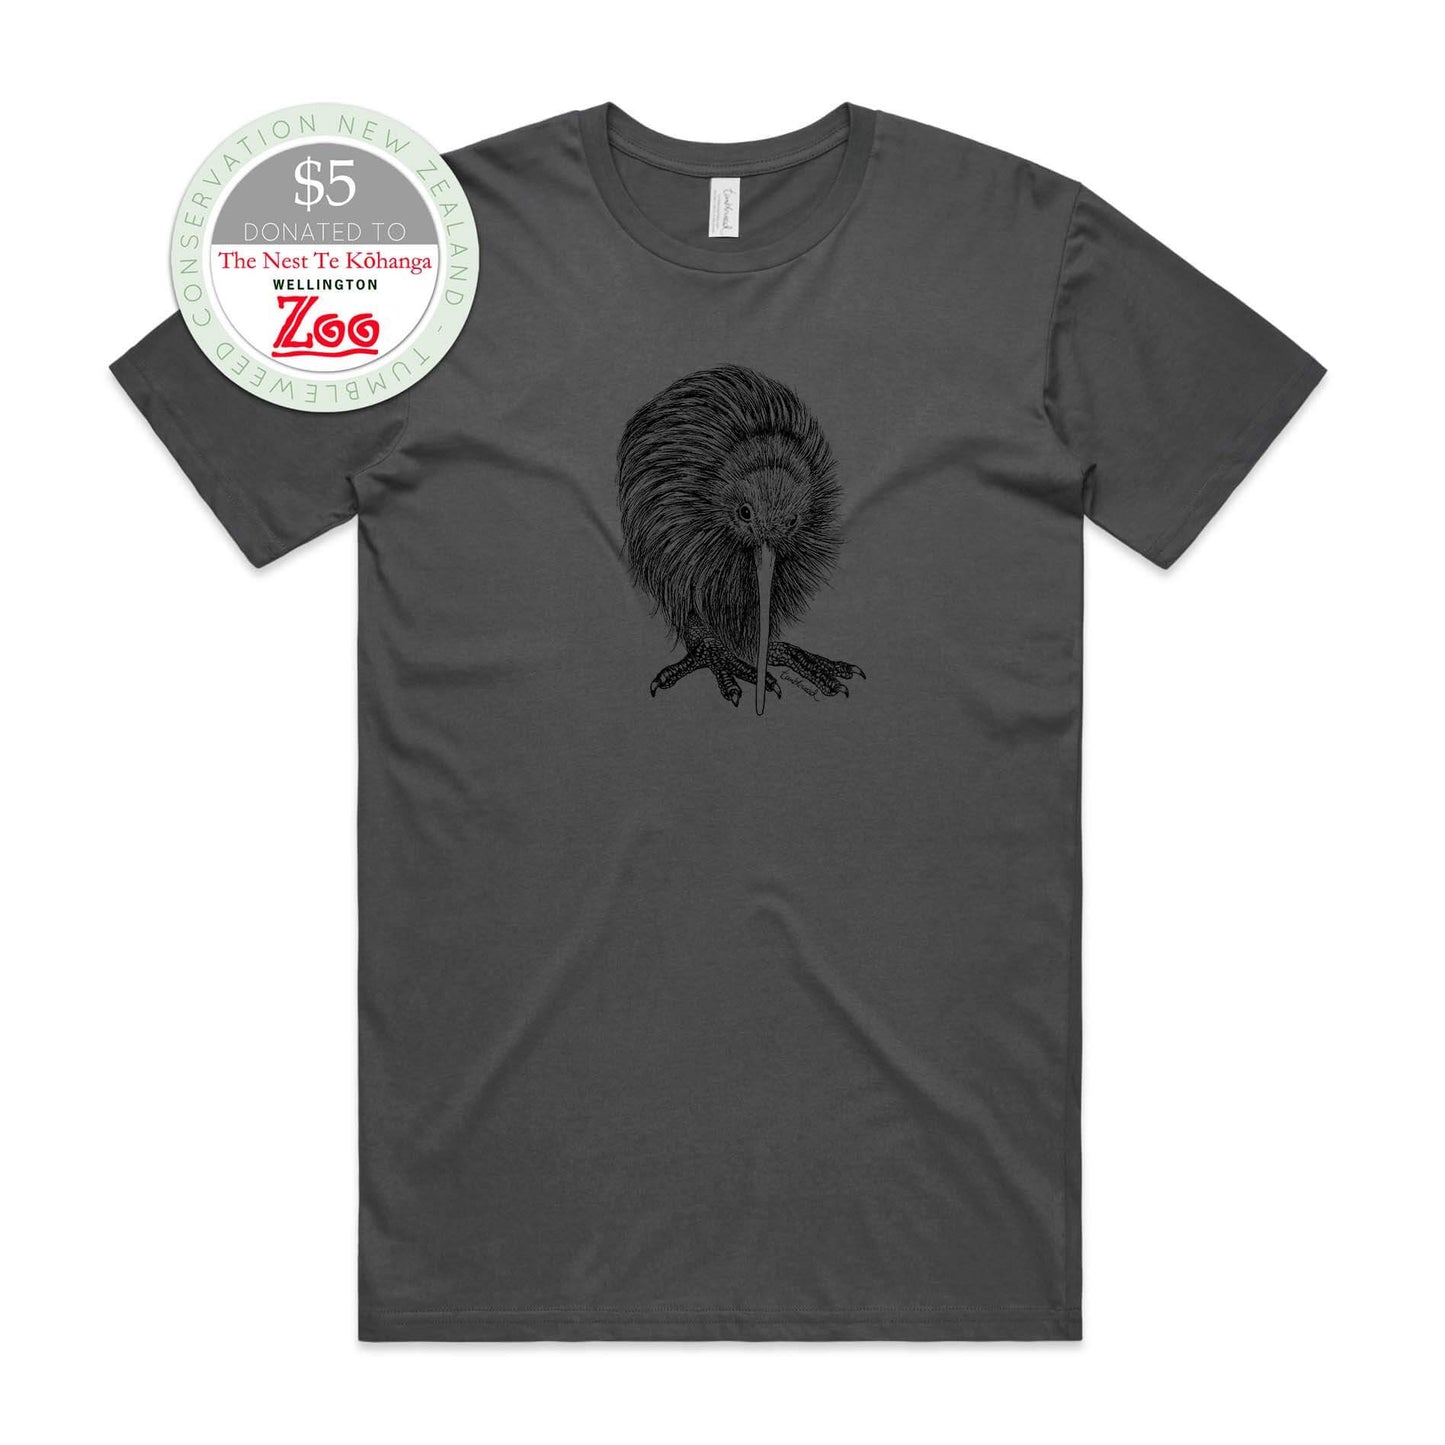 Charcoal, female t-shirt featuring a screen printed kiwi design.